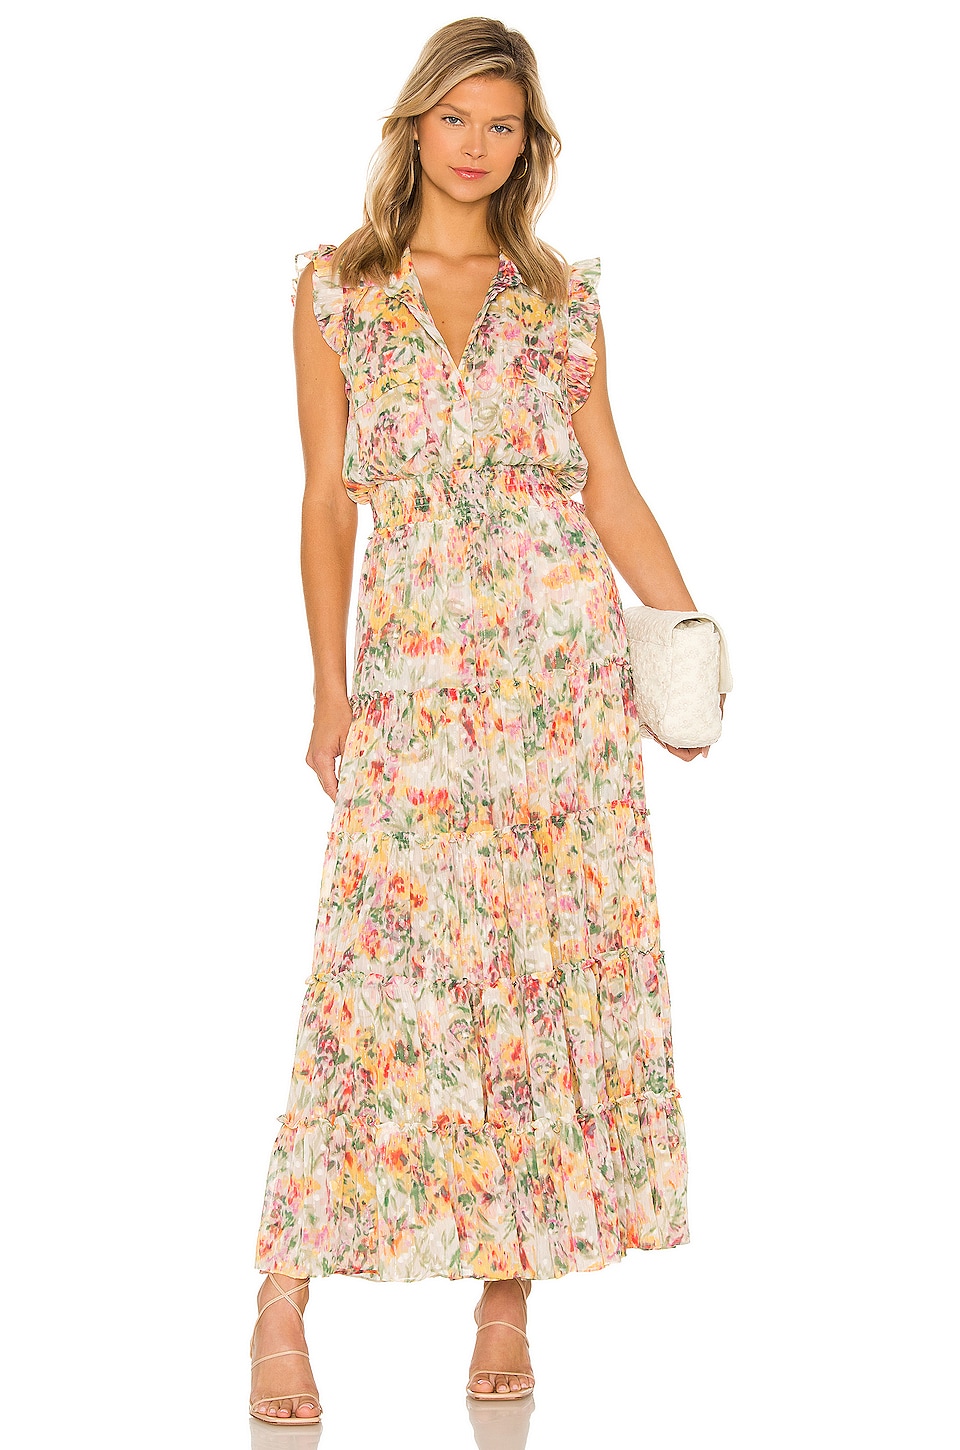 MISA Los Angeles Trina Dress in Bahara Floral | REVOLVE